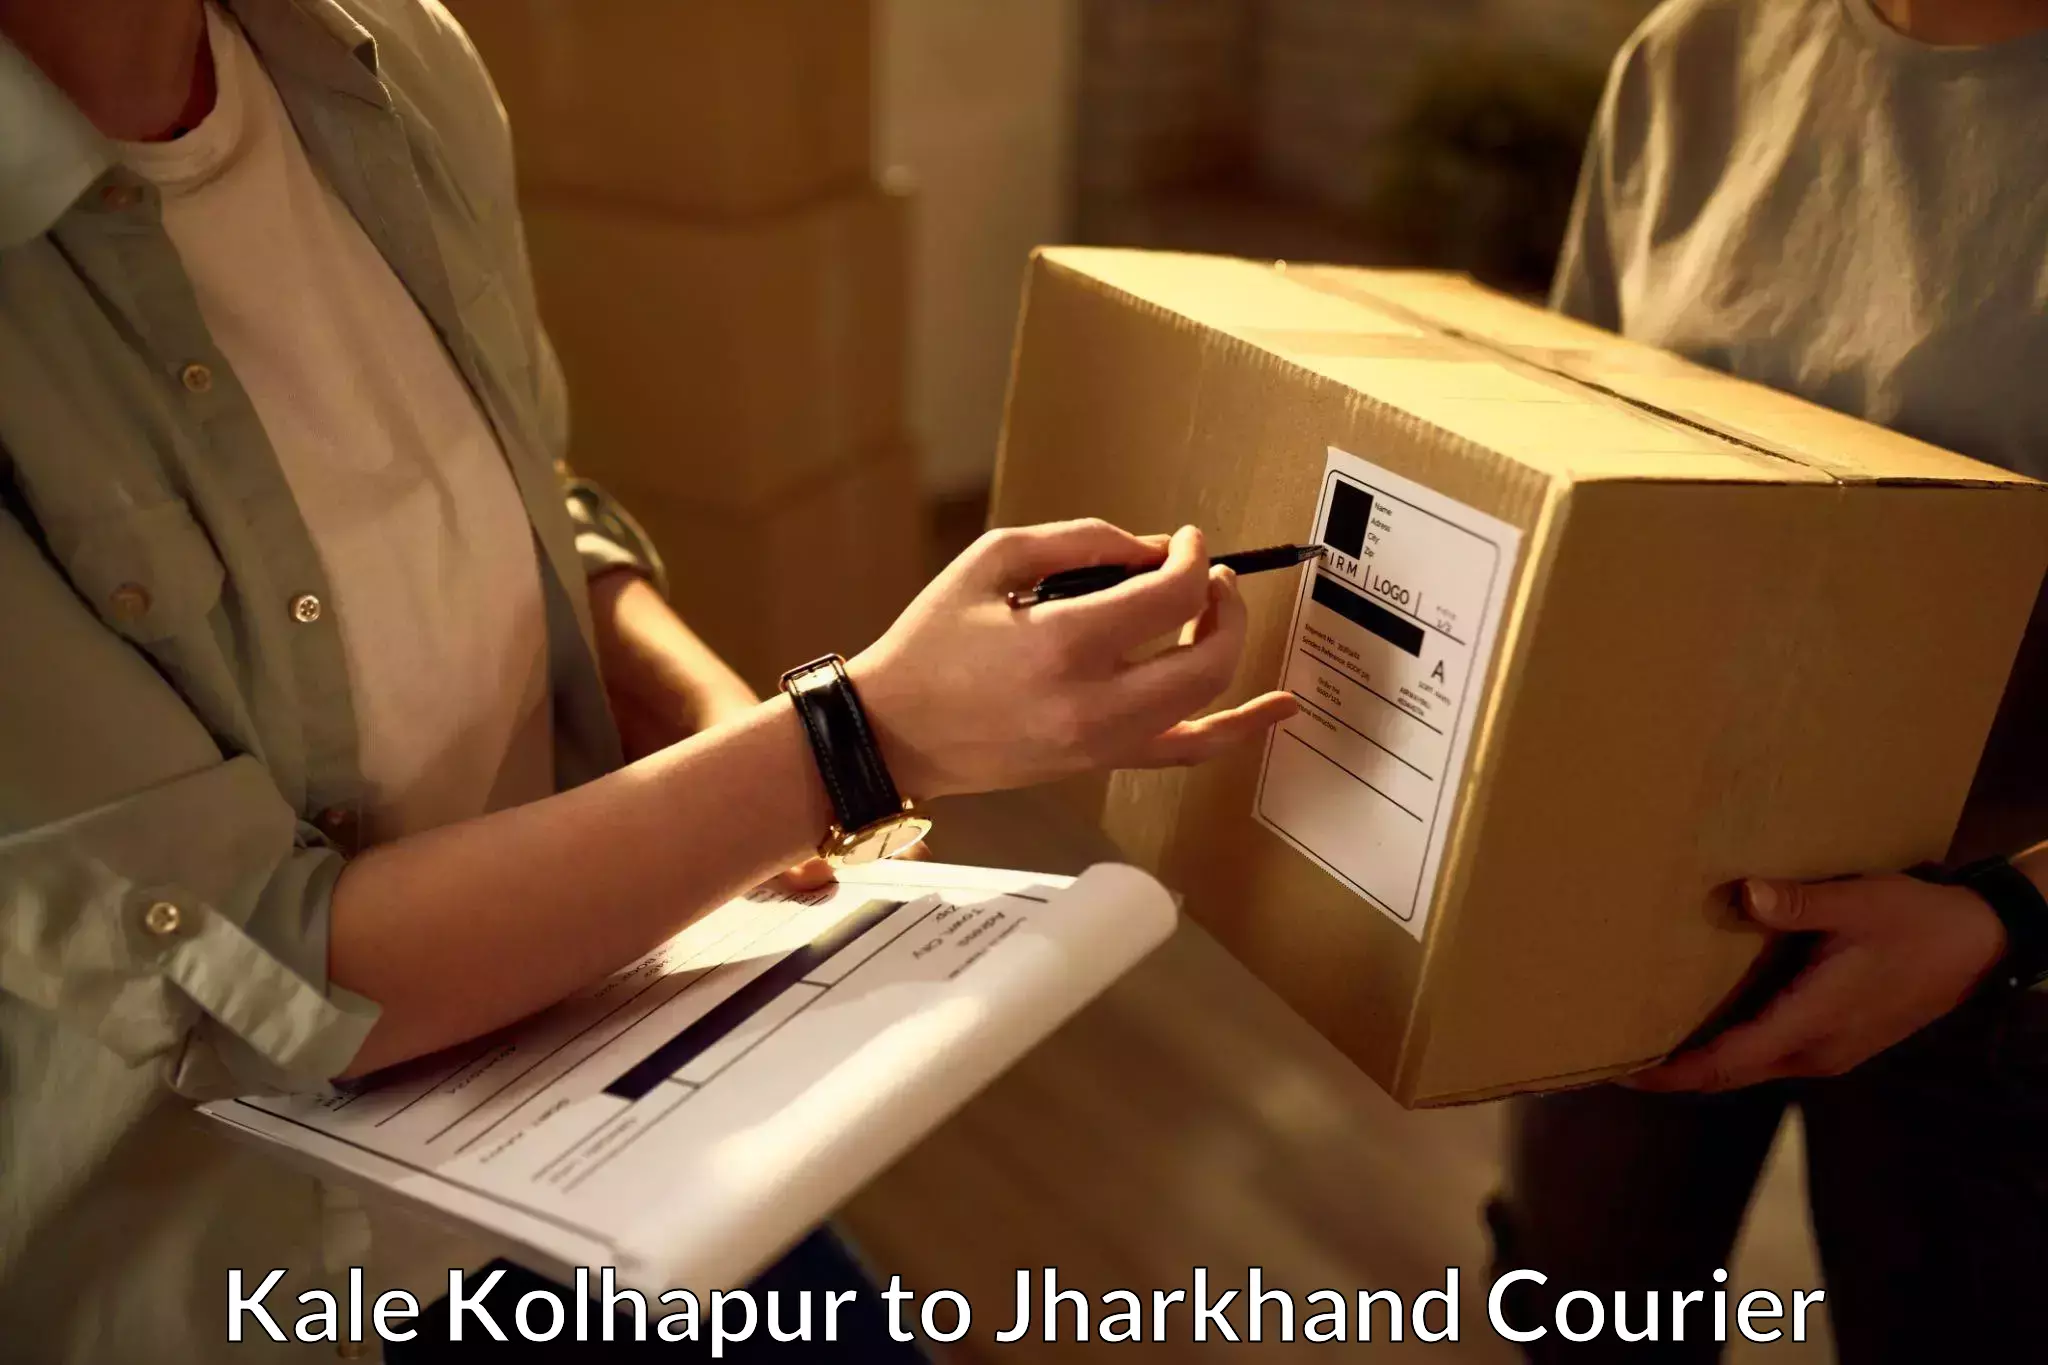 Courier service partnerships Kale Kolhapur to Khalari Ranchi